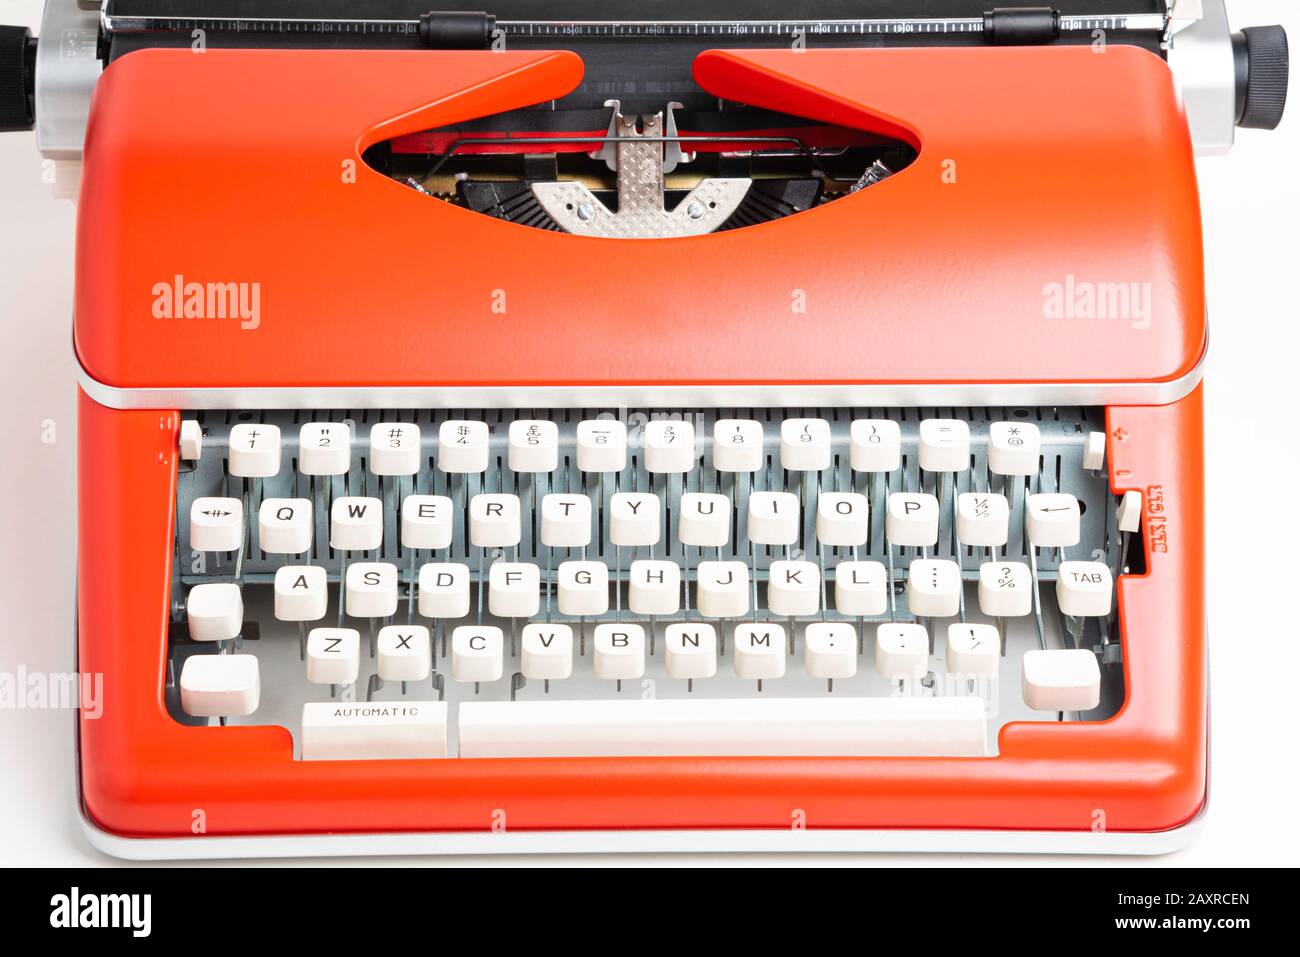 https://c8.alamy.com/compes/2axrcen/estudio-de-una-maquina-de-escribir-manual-portatil-de-estilo-retro-con-teclado-de-plastico-de-color-marfil-y-carcasa-de-metal-rojo-naranja-2axrcen.jpg